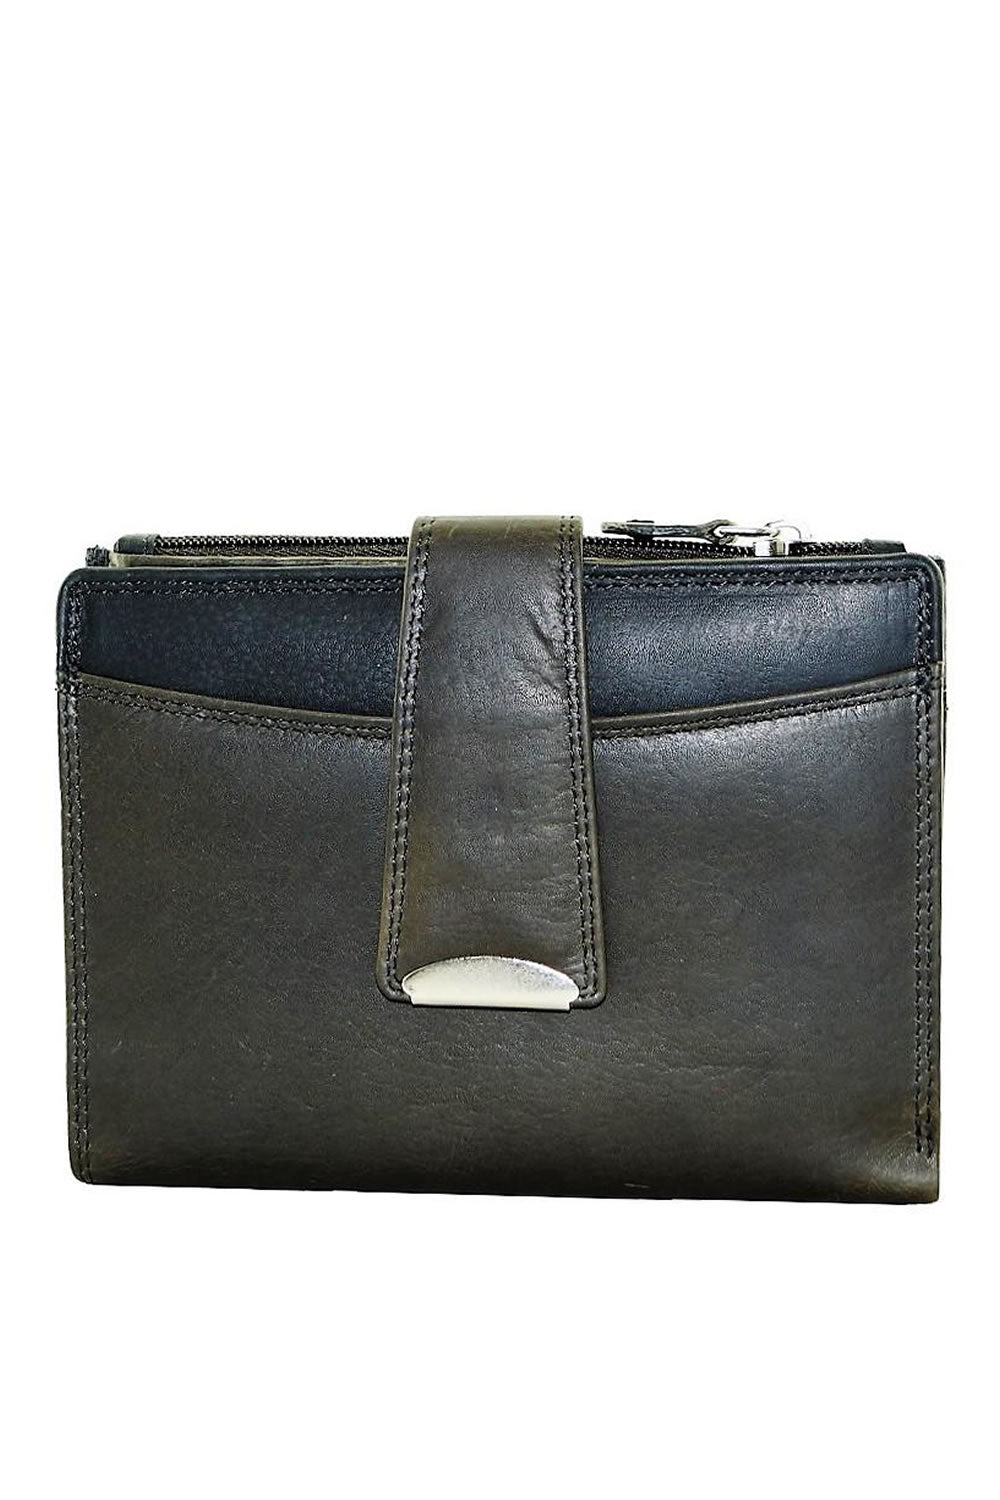 Cenzoni RFID Oil Pull Up Leather Ladies Wallet